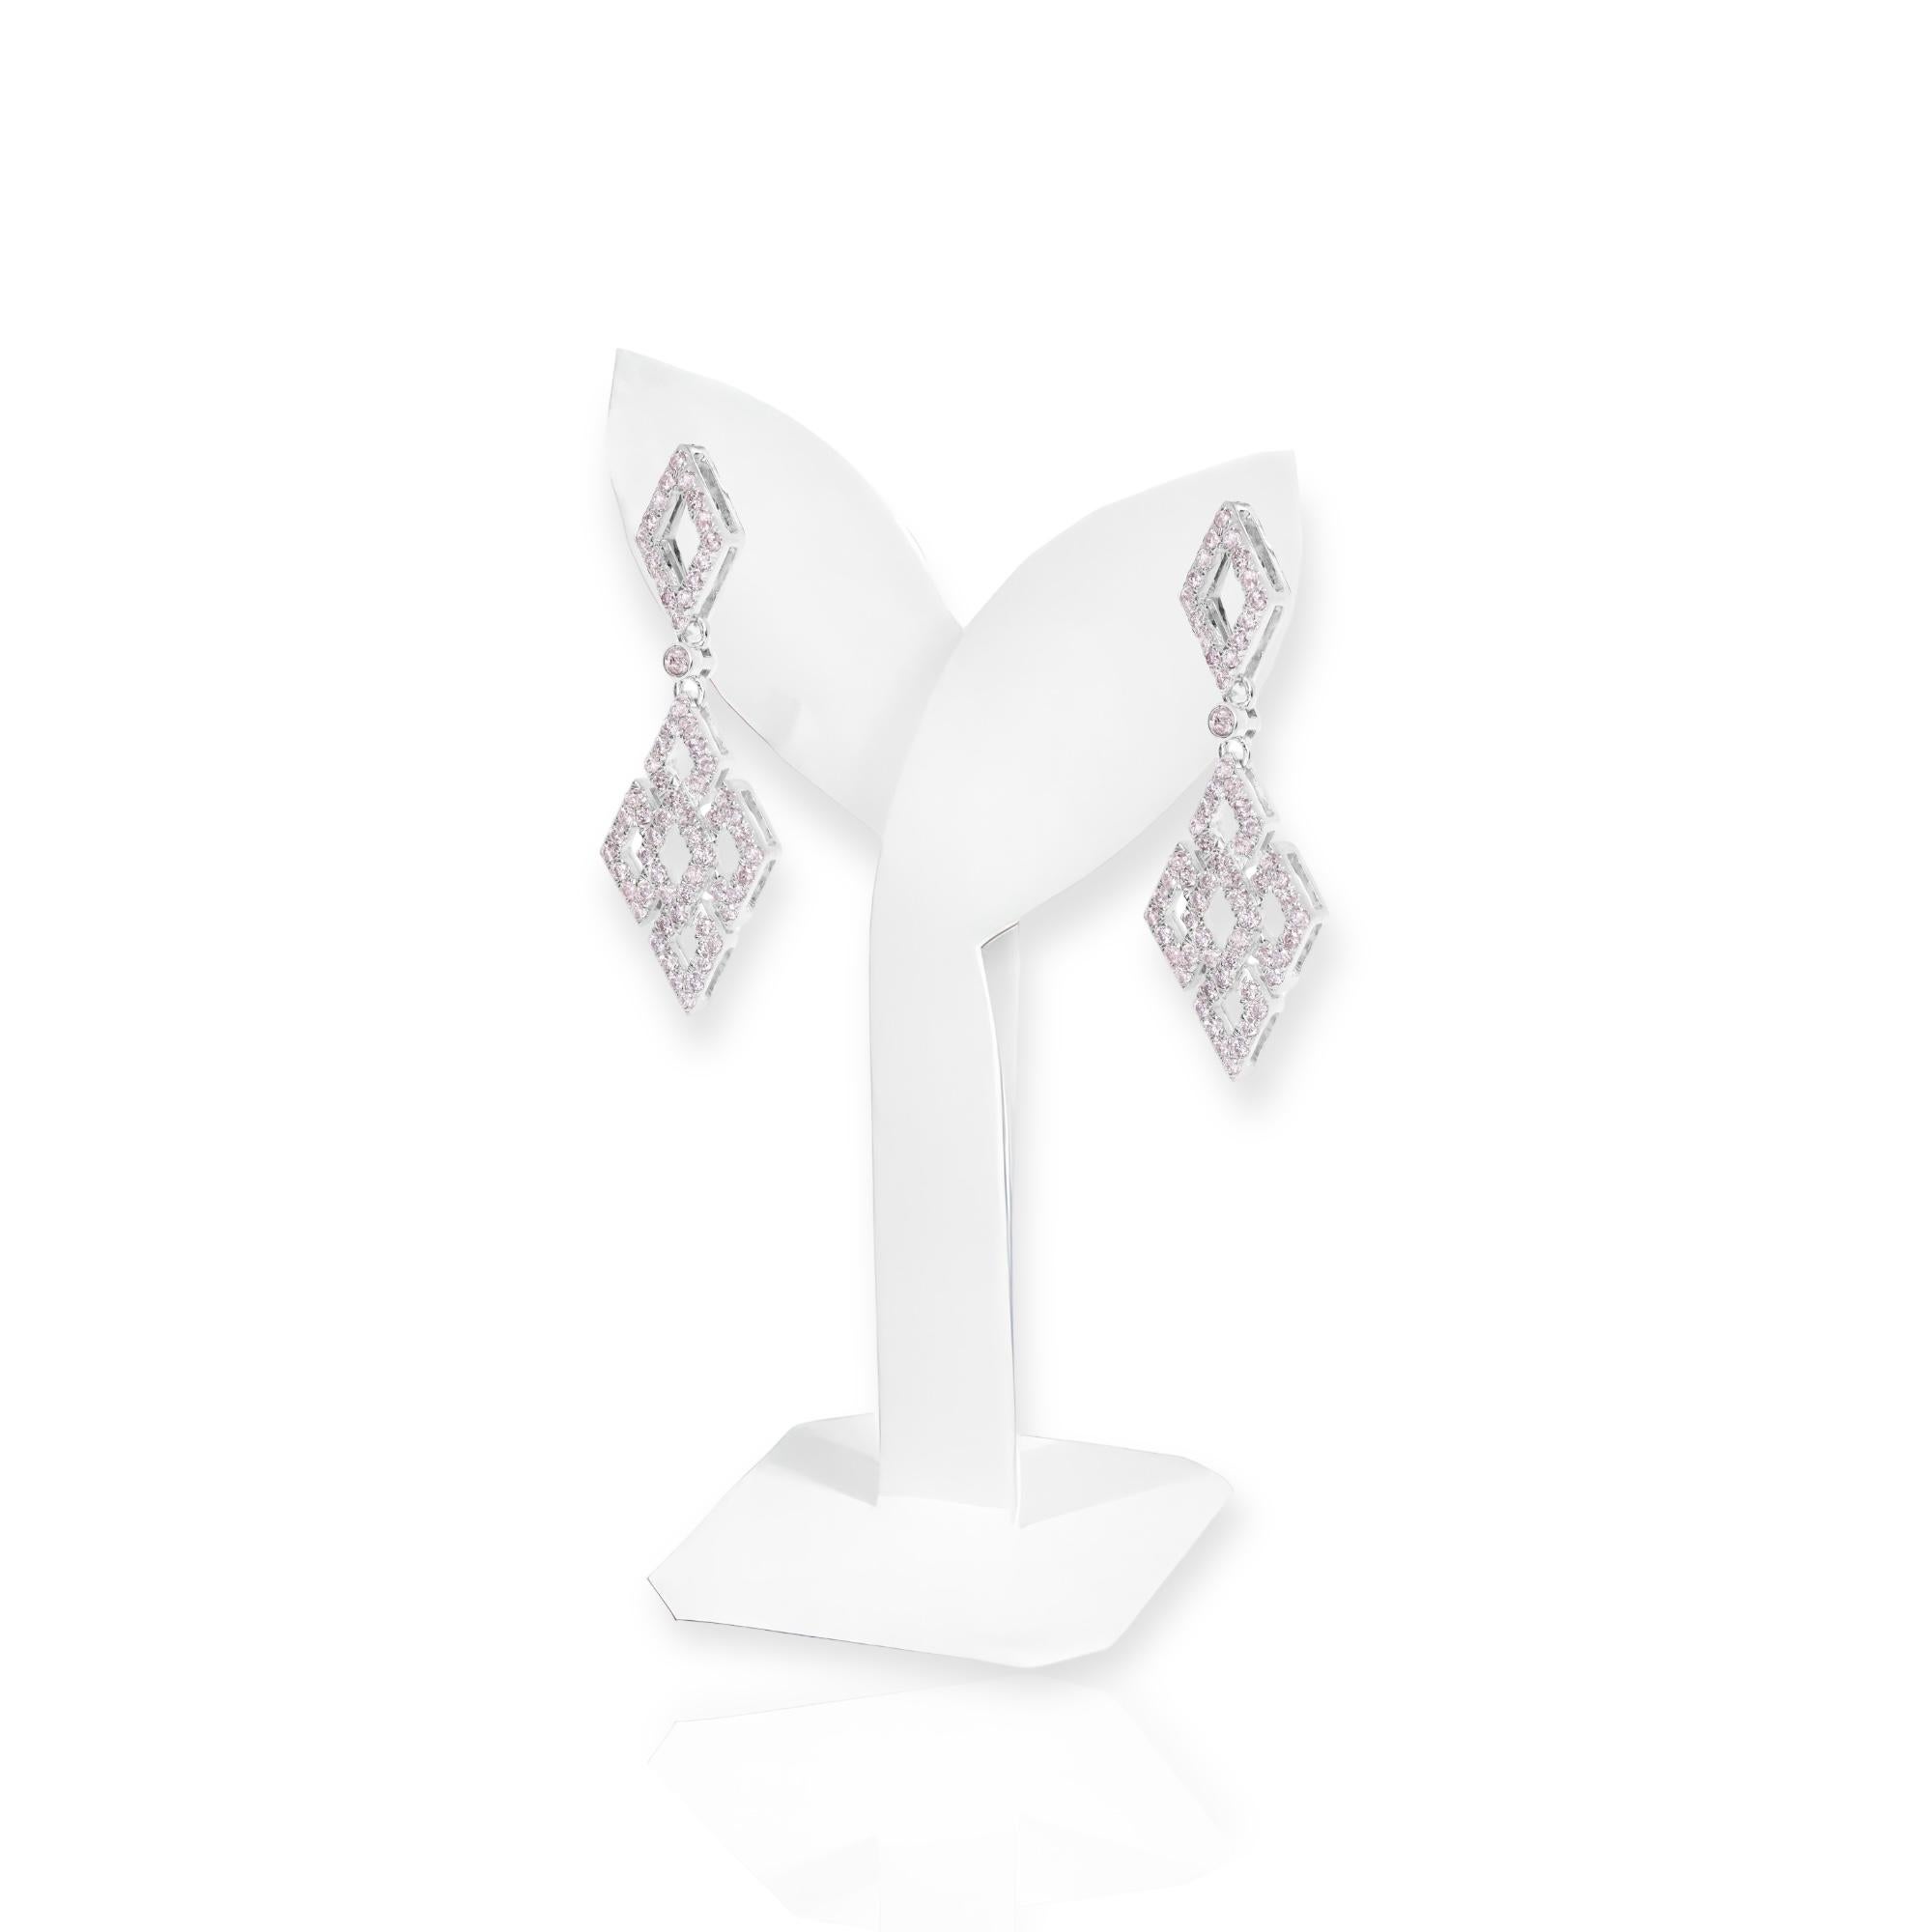 Contemporary IGI 14K 0.96 ct Natural Pink Diamonds Art Deco Design Stud Earrings For Sale